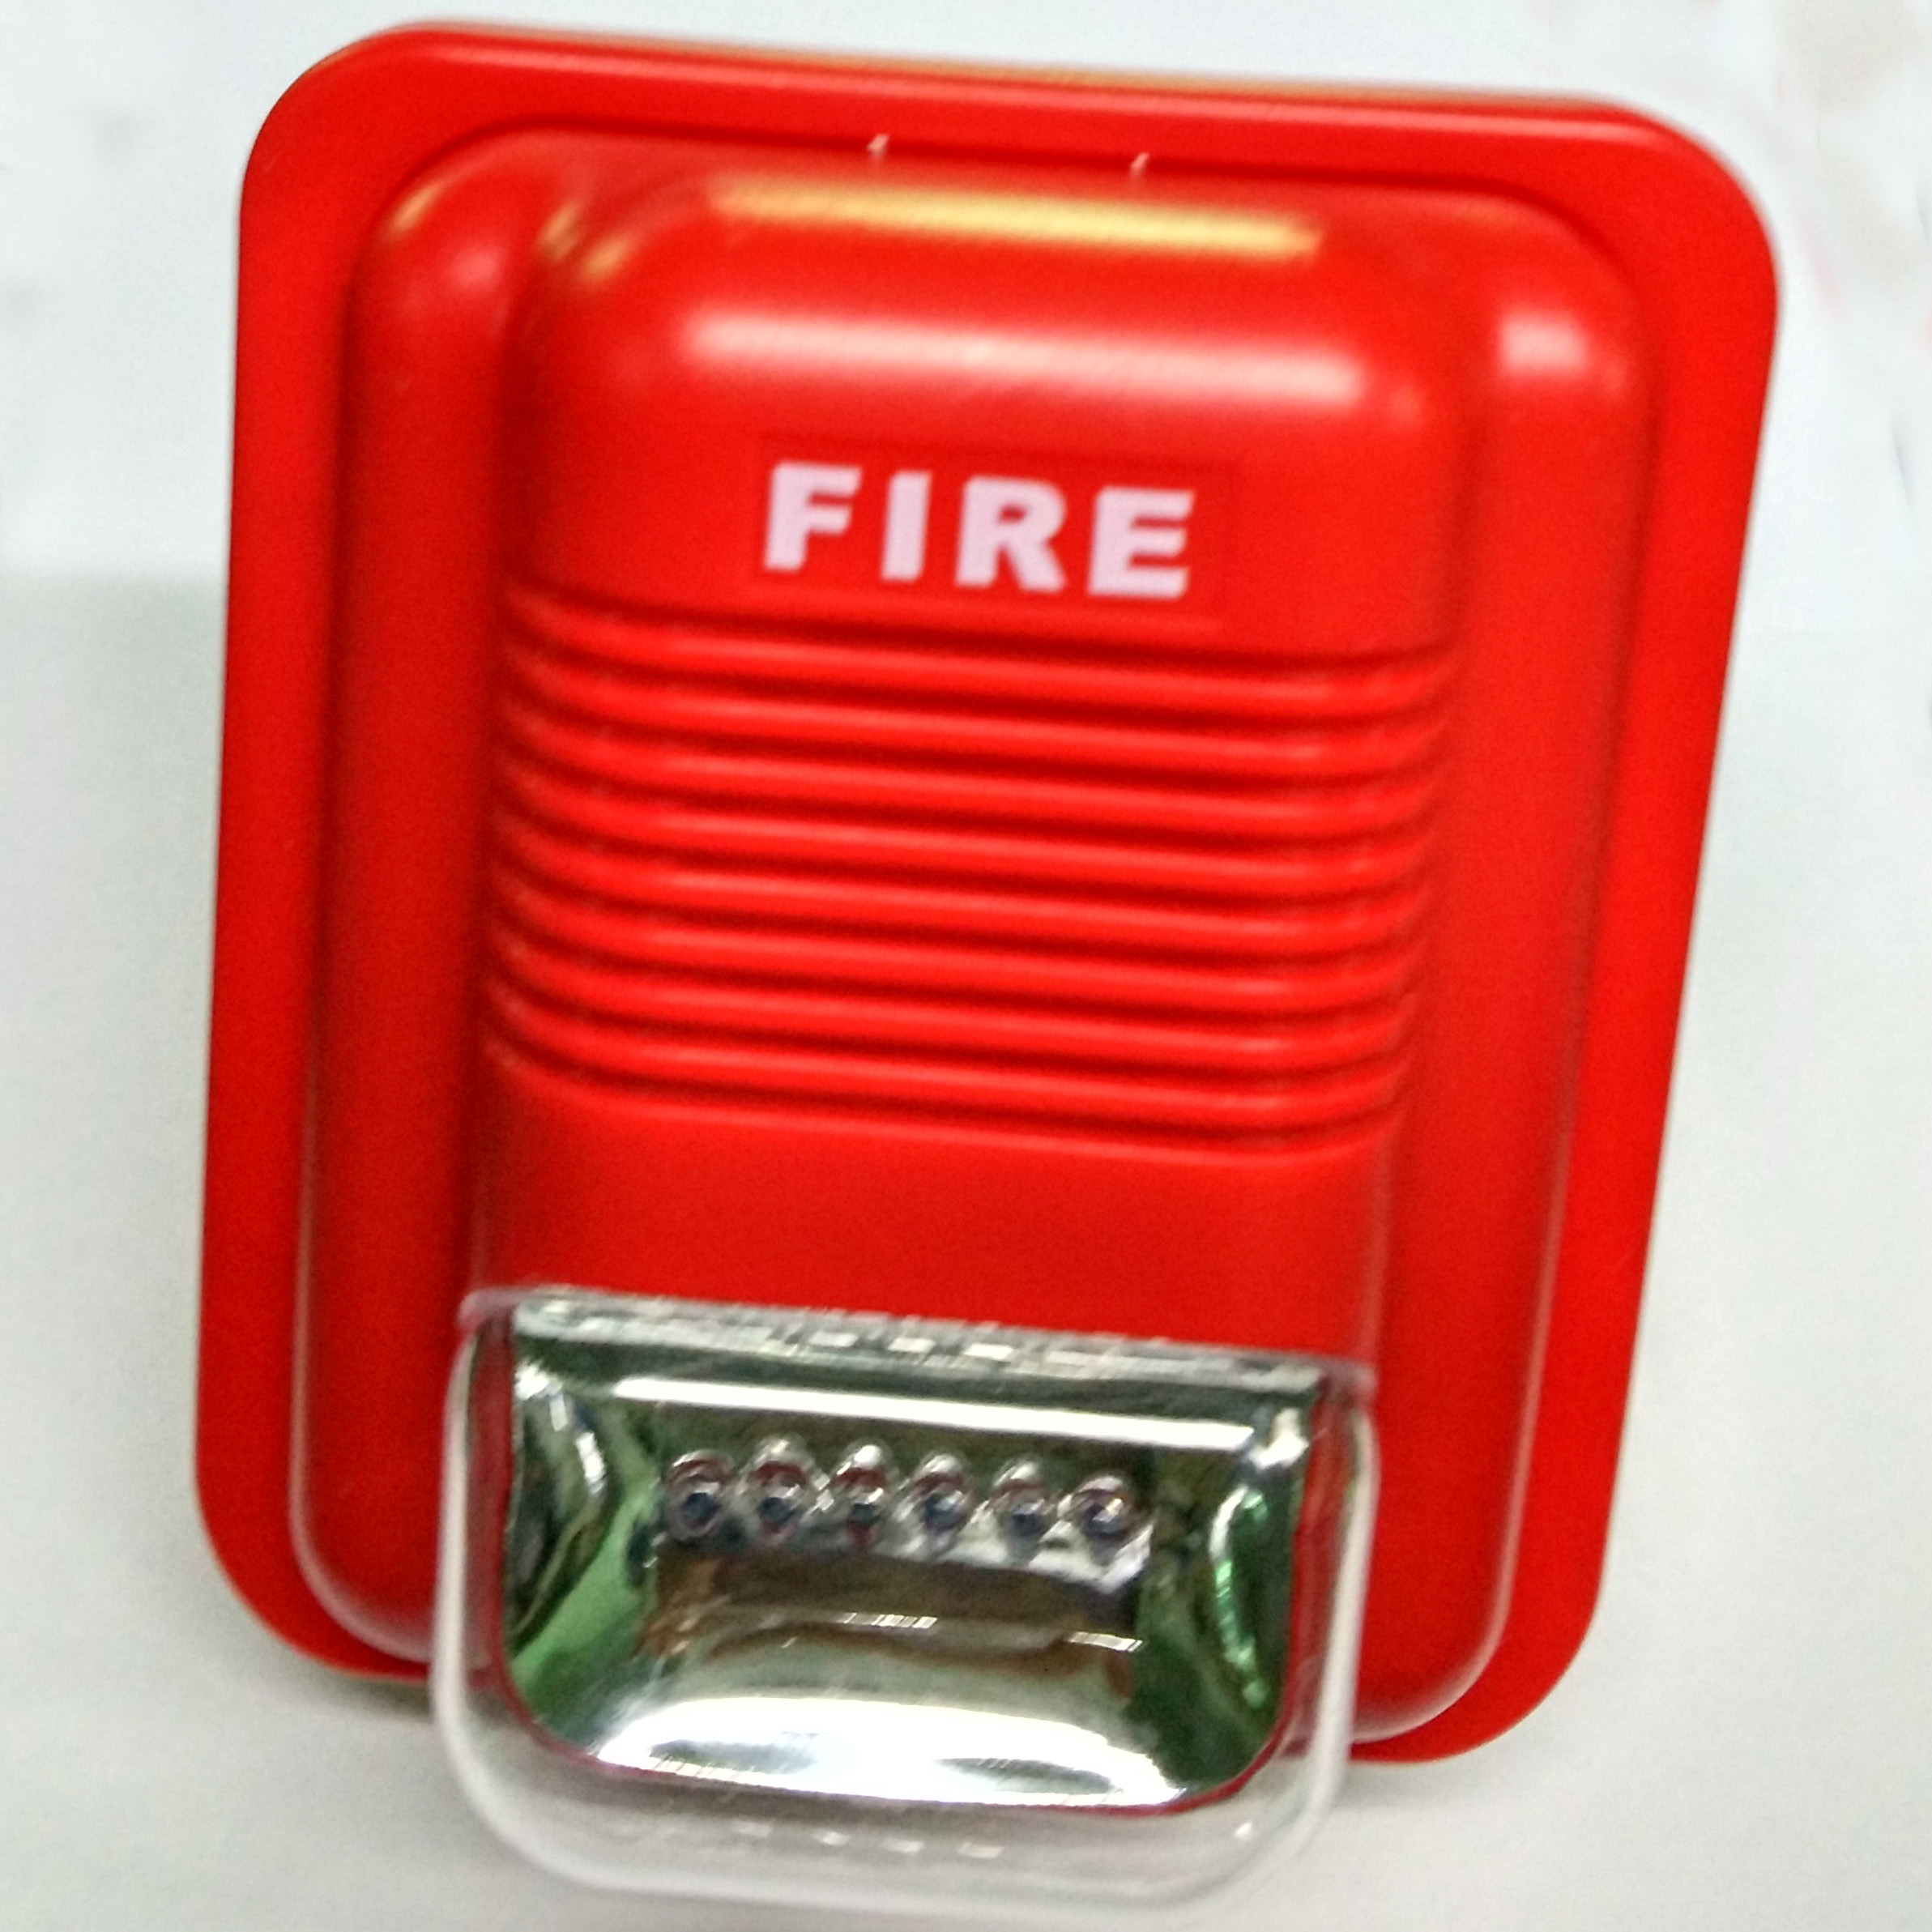 Fire Alarm Signal Light for Fire Evacuation